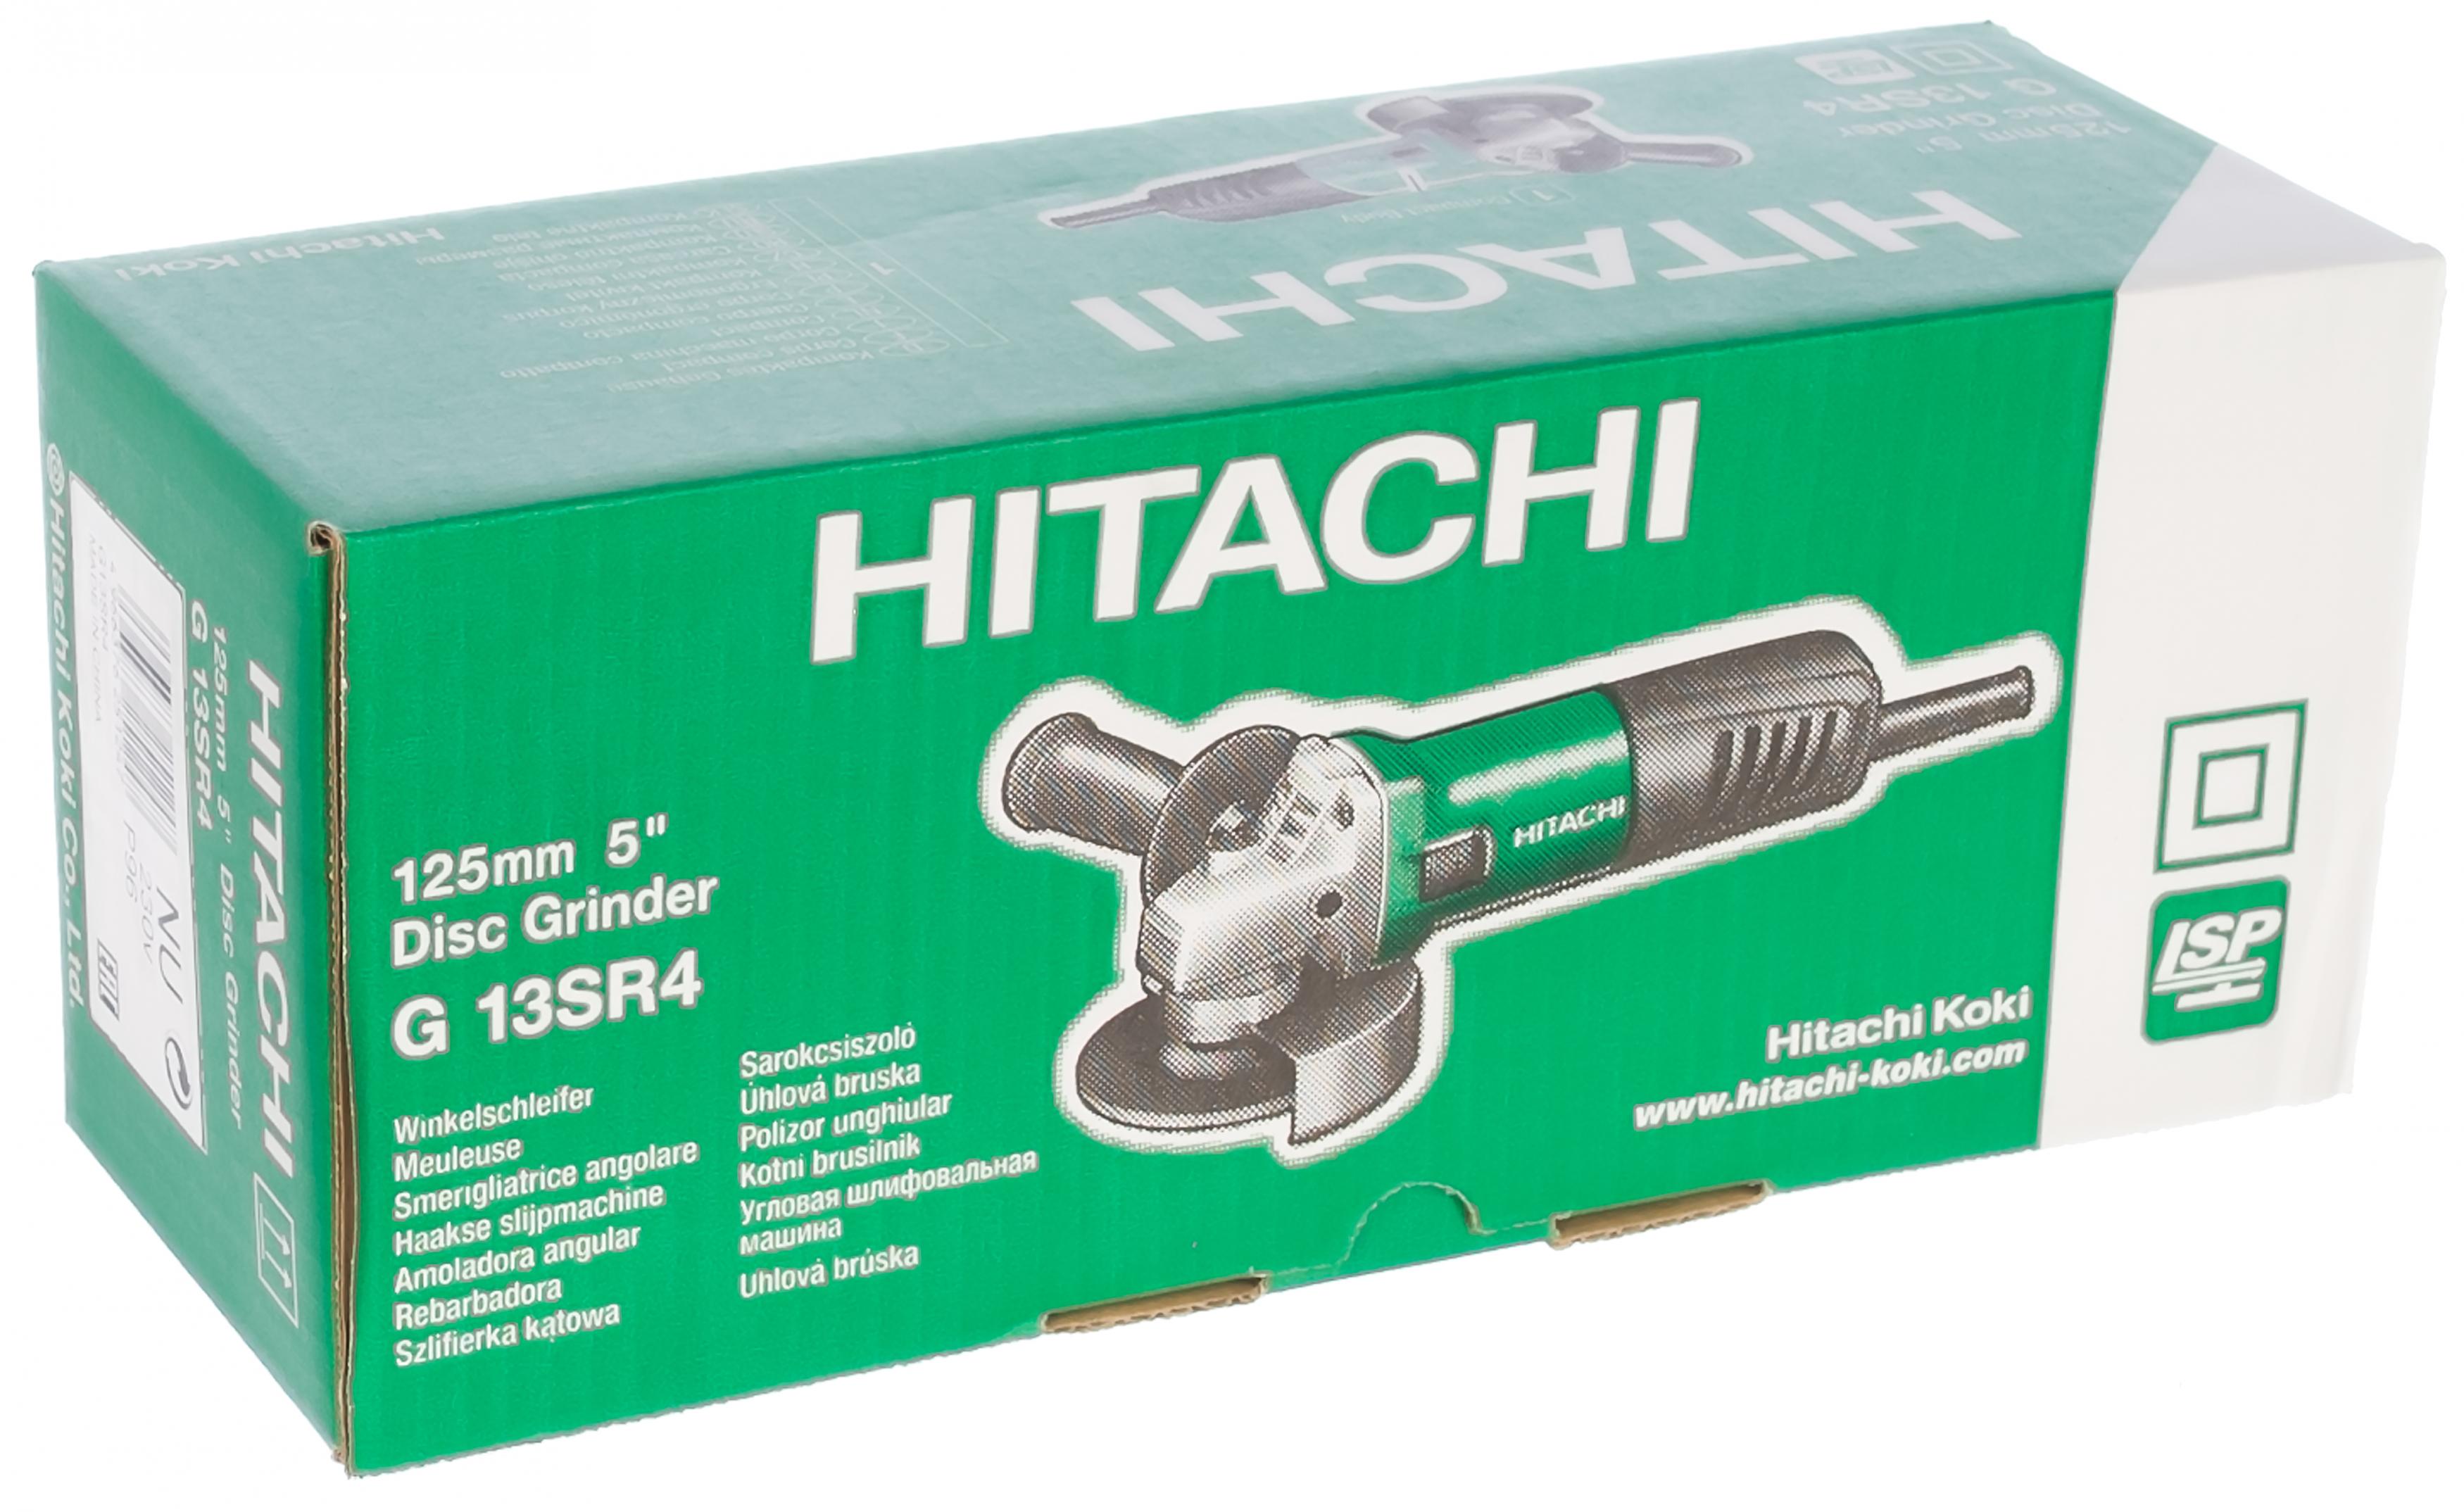 УШМ (болгарка) Hitachi G13sr4-nu